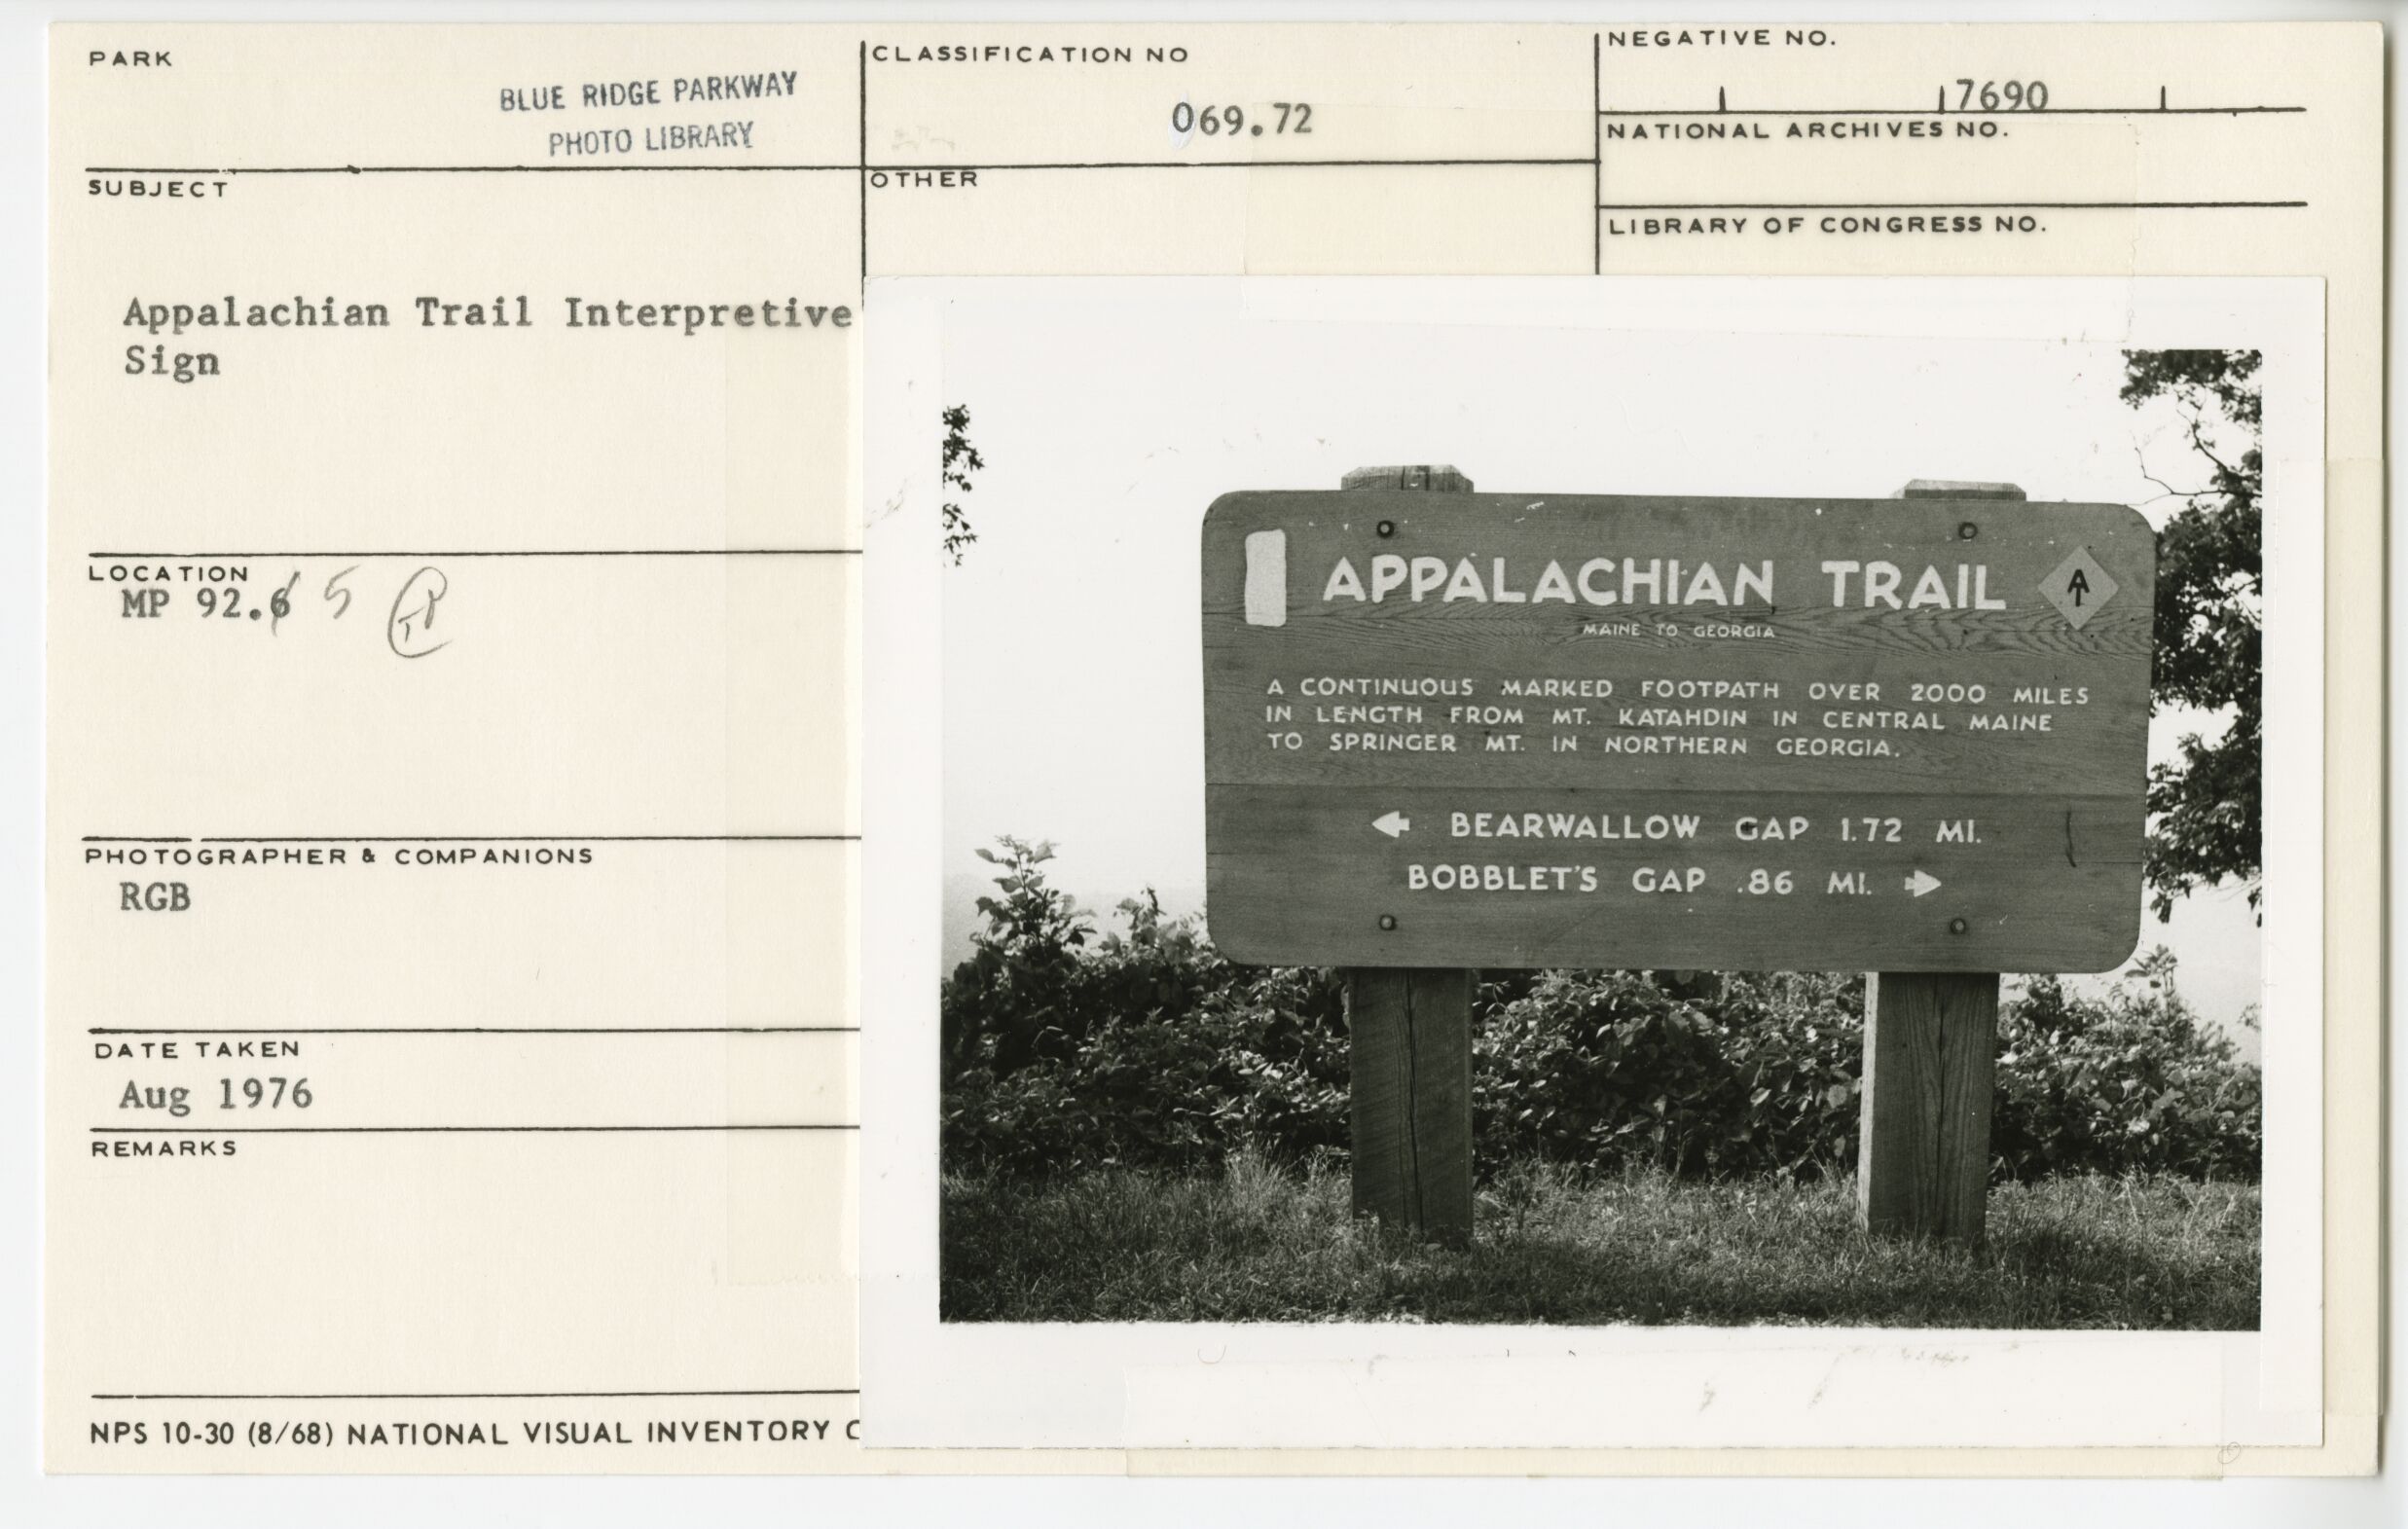 Appalachian Trail interpretive sign